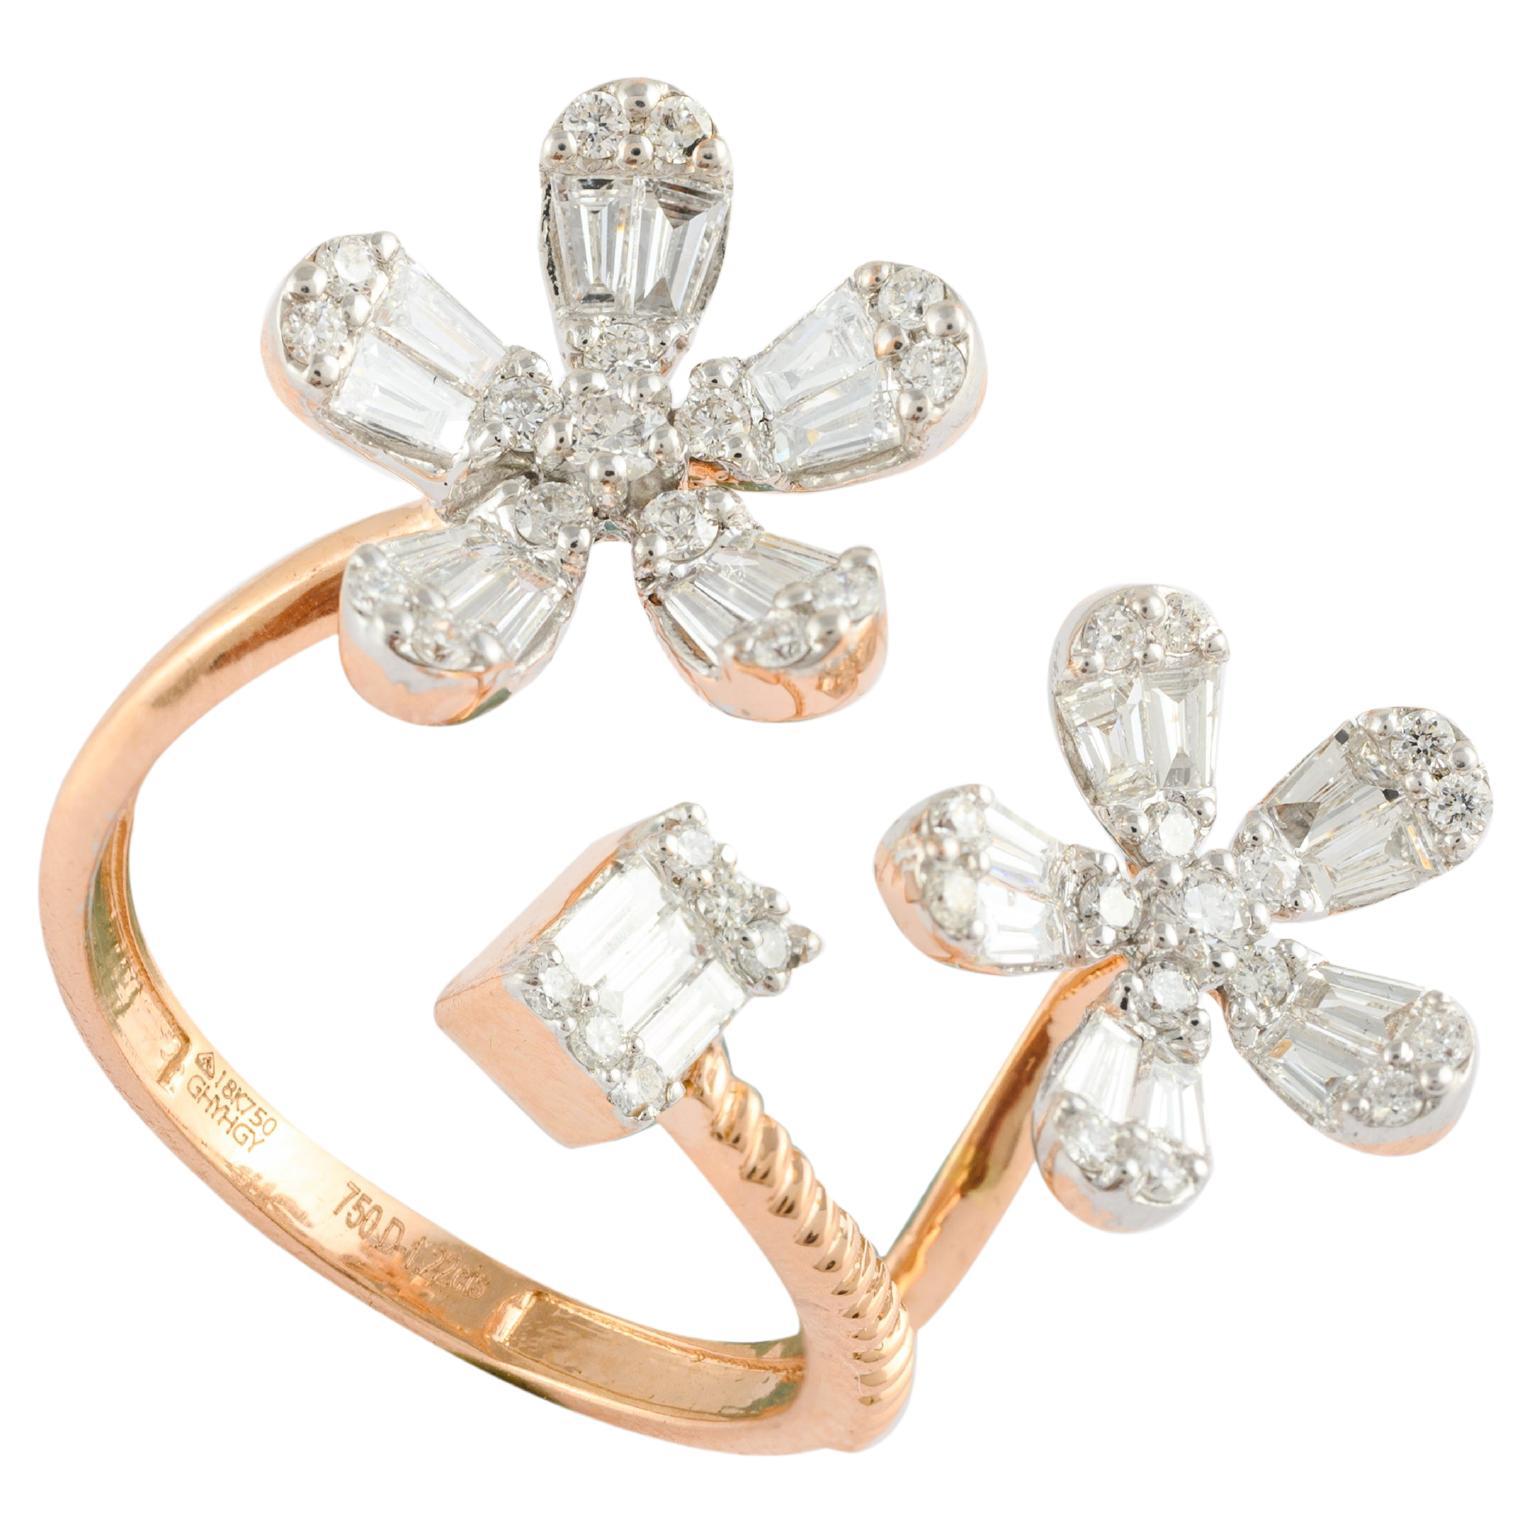 18 Karat massiver Roségold Designer Damen-Blumenring mit atemberaubenden Diamanten